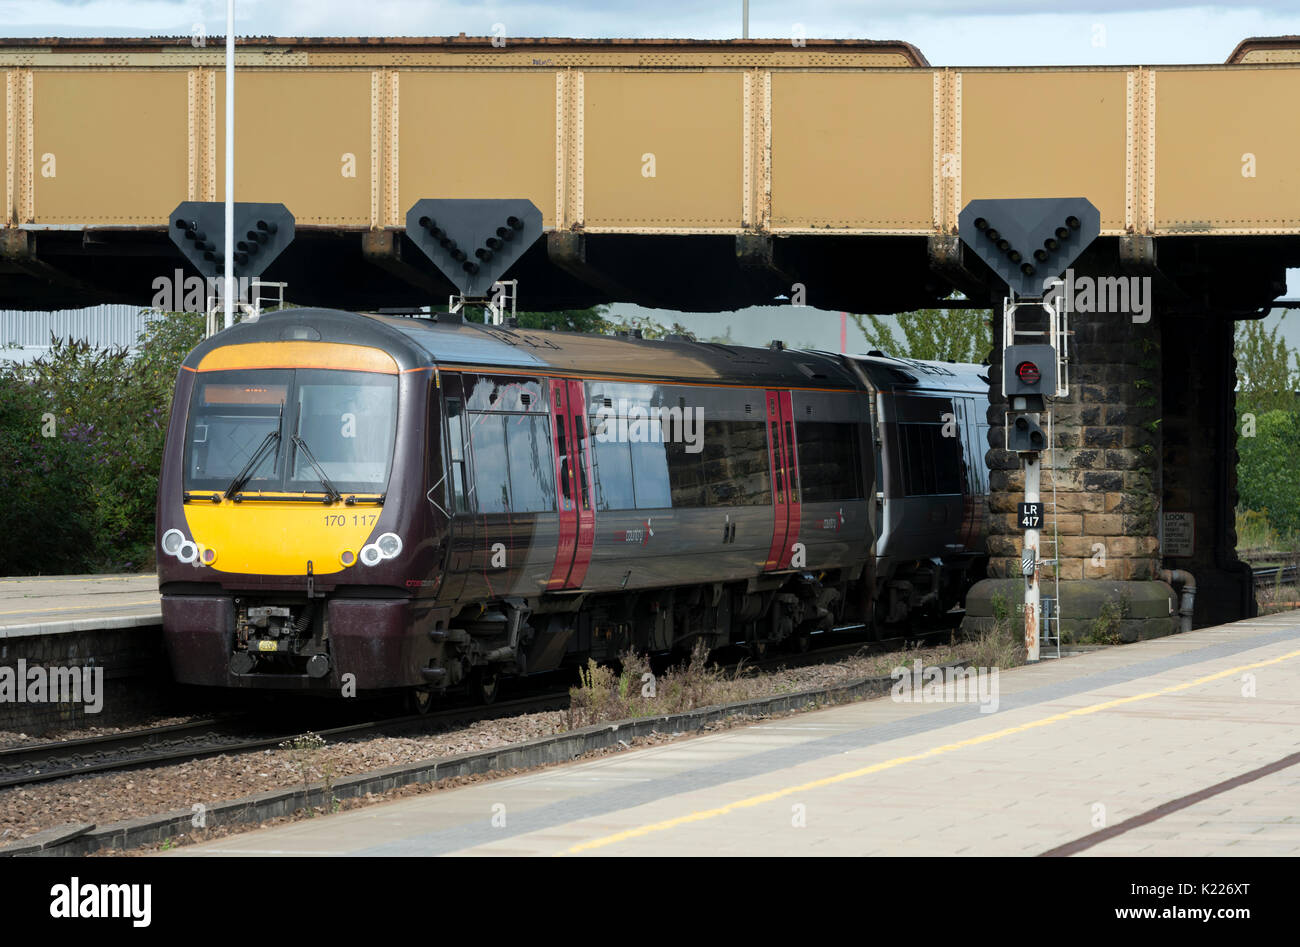 Arriva CrossCountry class 170 diesel train quitter la gare de Leicester, Leicestershire, UK Banque D'Images